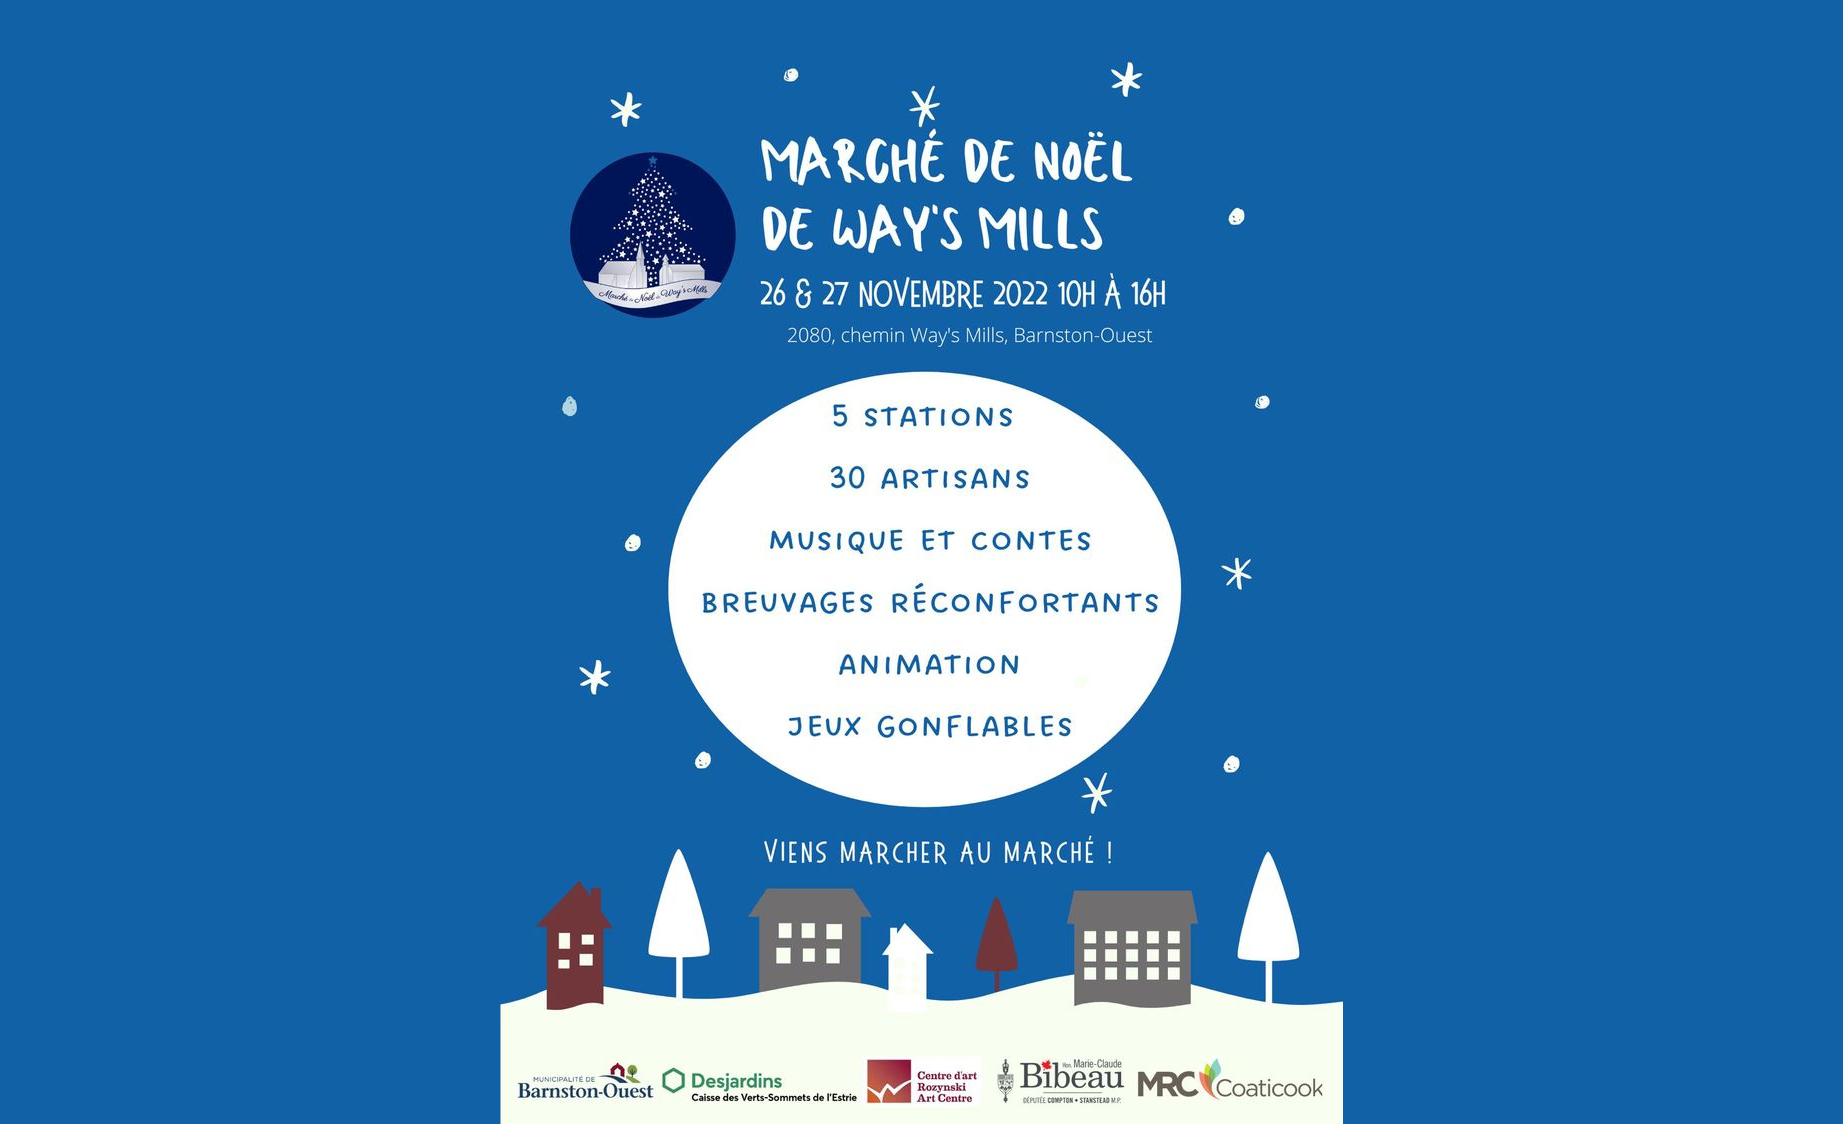 Marché de Noël de Way's Mills - 26 et 27 novembre 2022